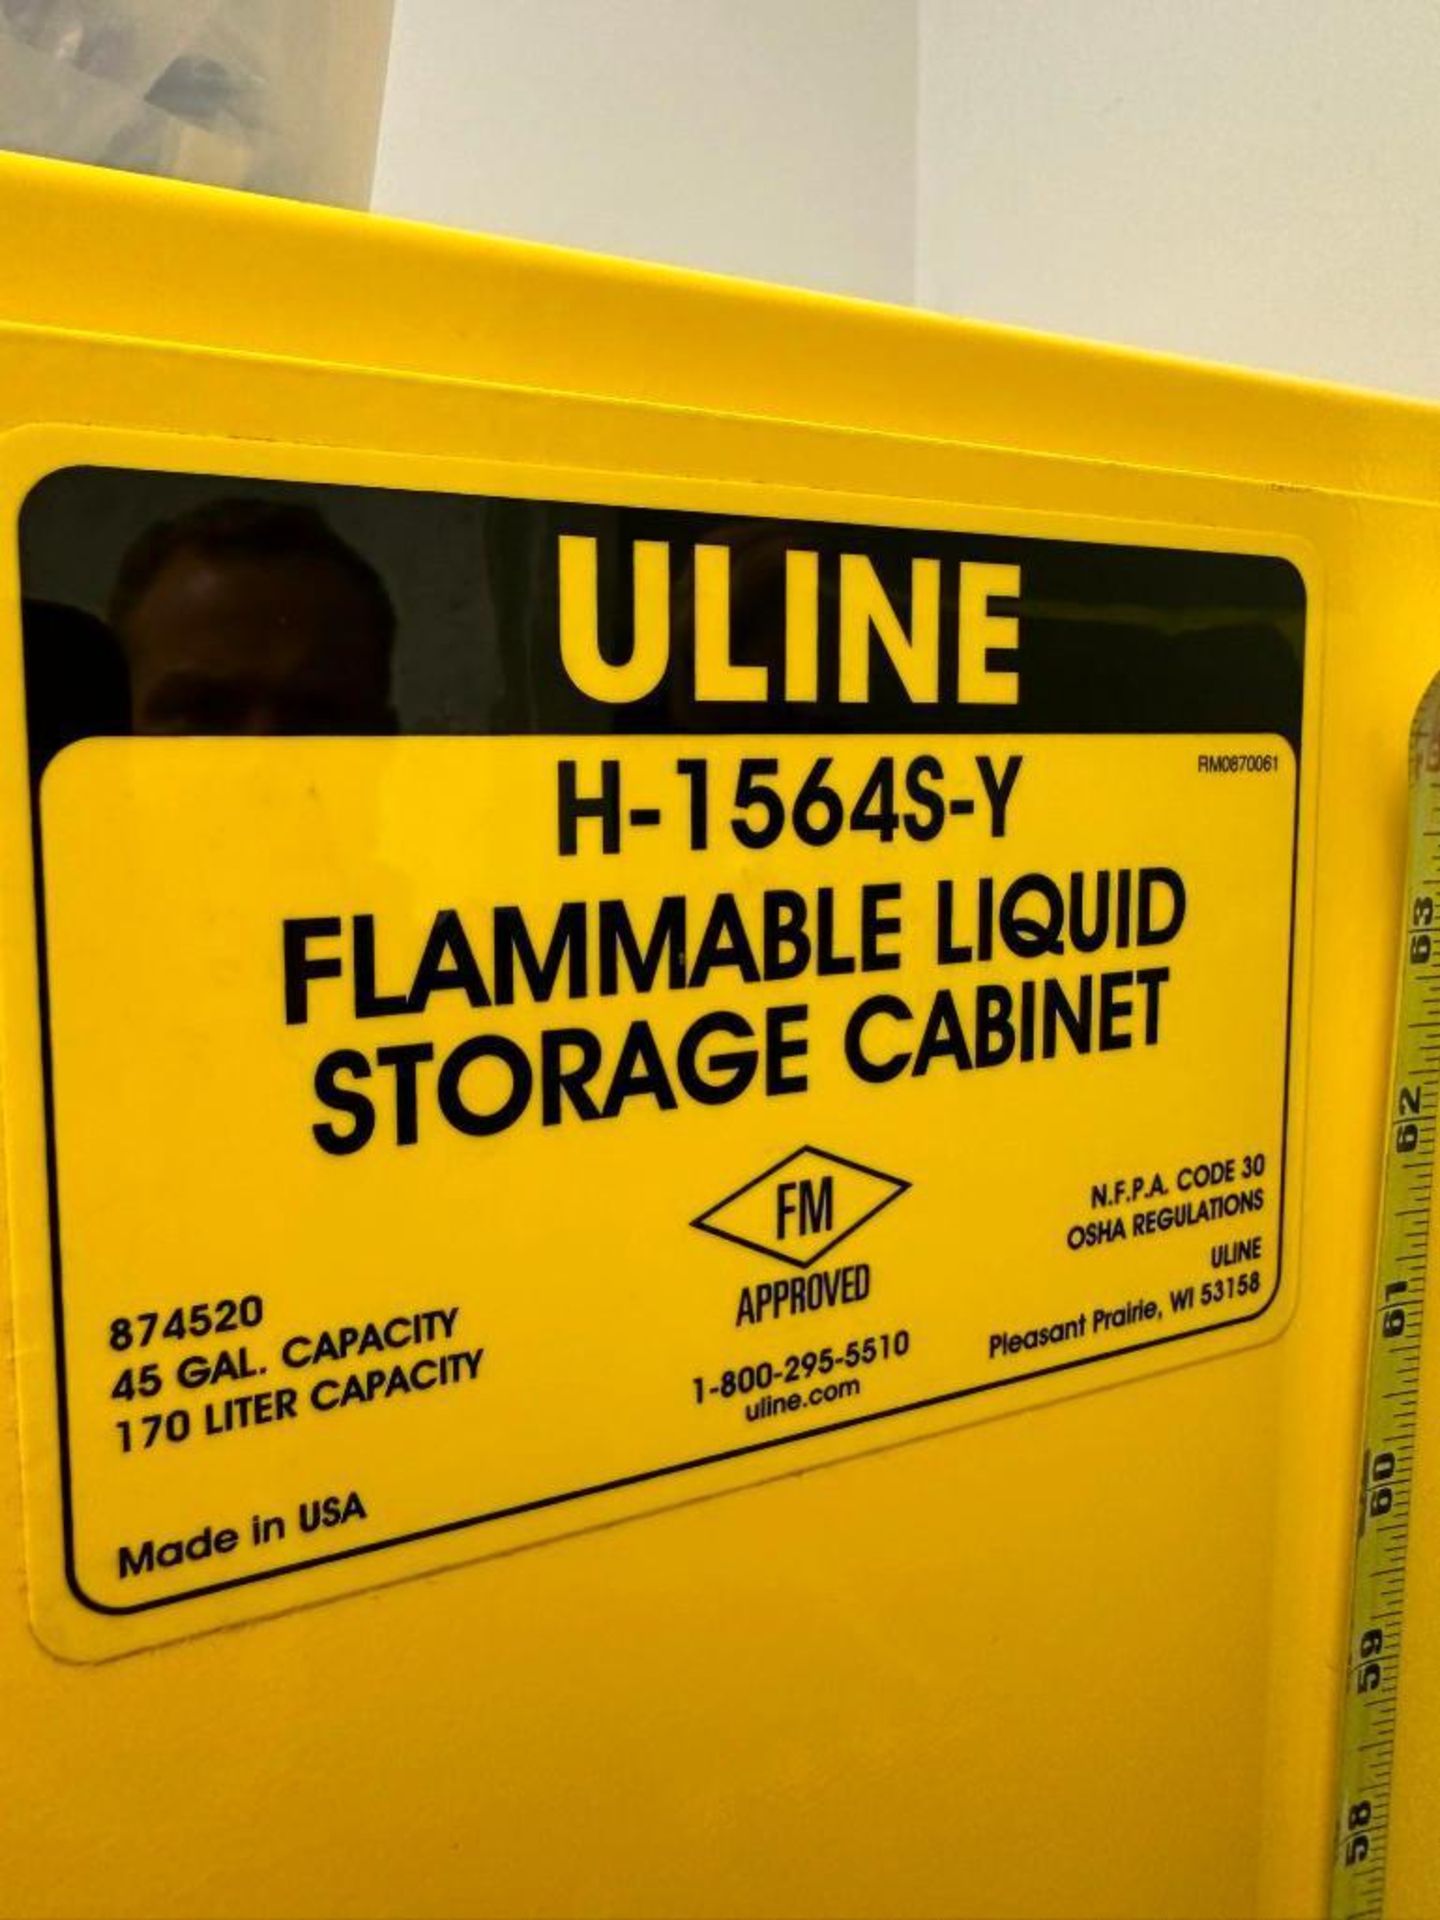 Uline 45 Gallon Flammable Liquid Storage Cabinet, 43" x 18" x 65" - Image 3 of 3